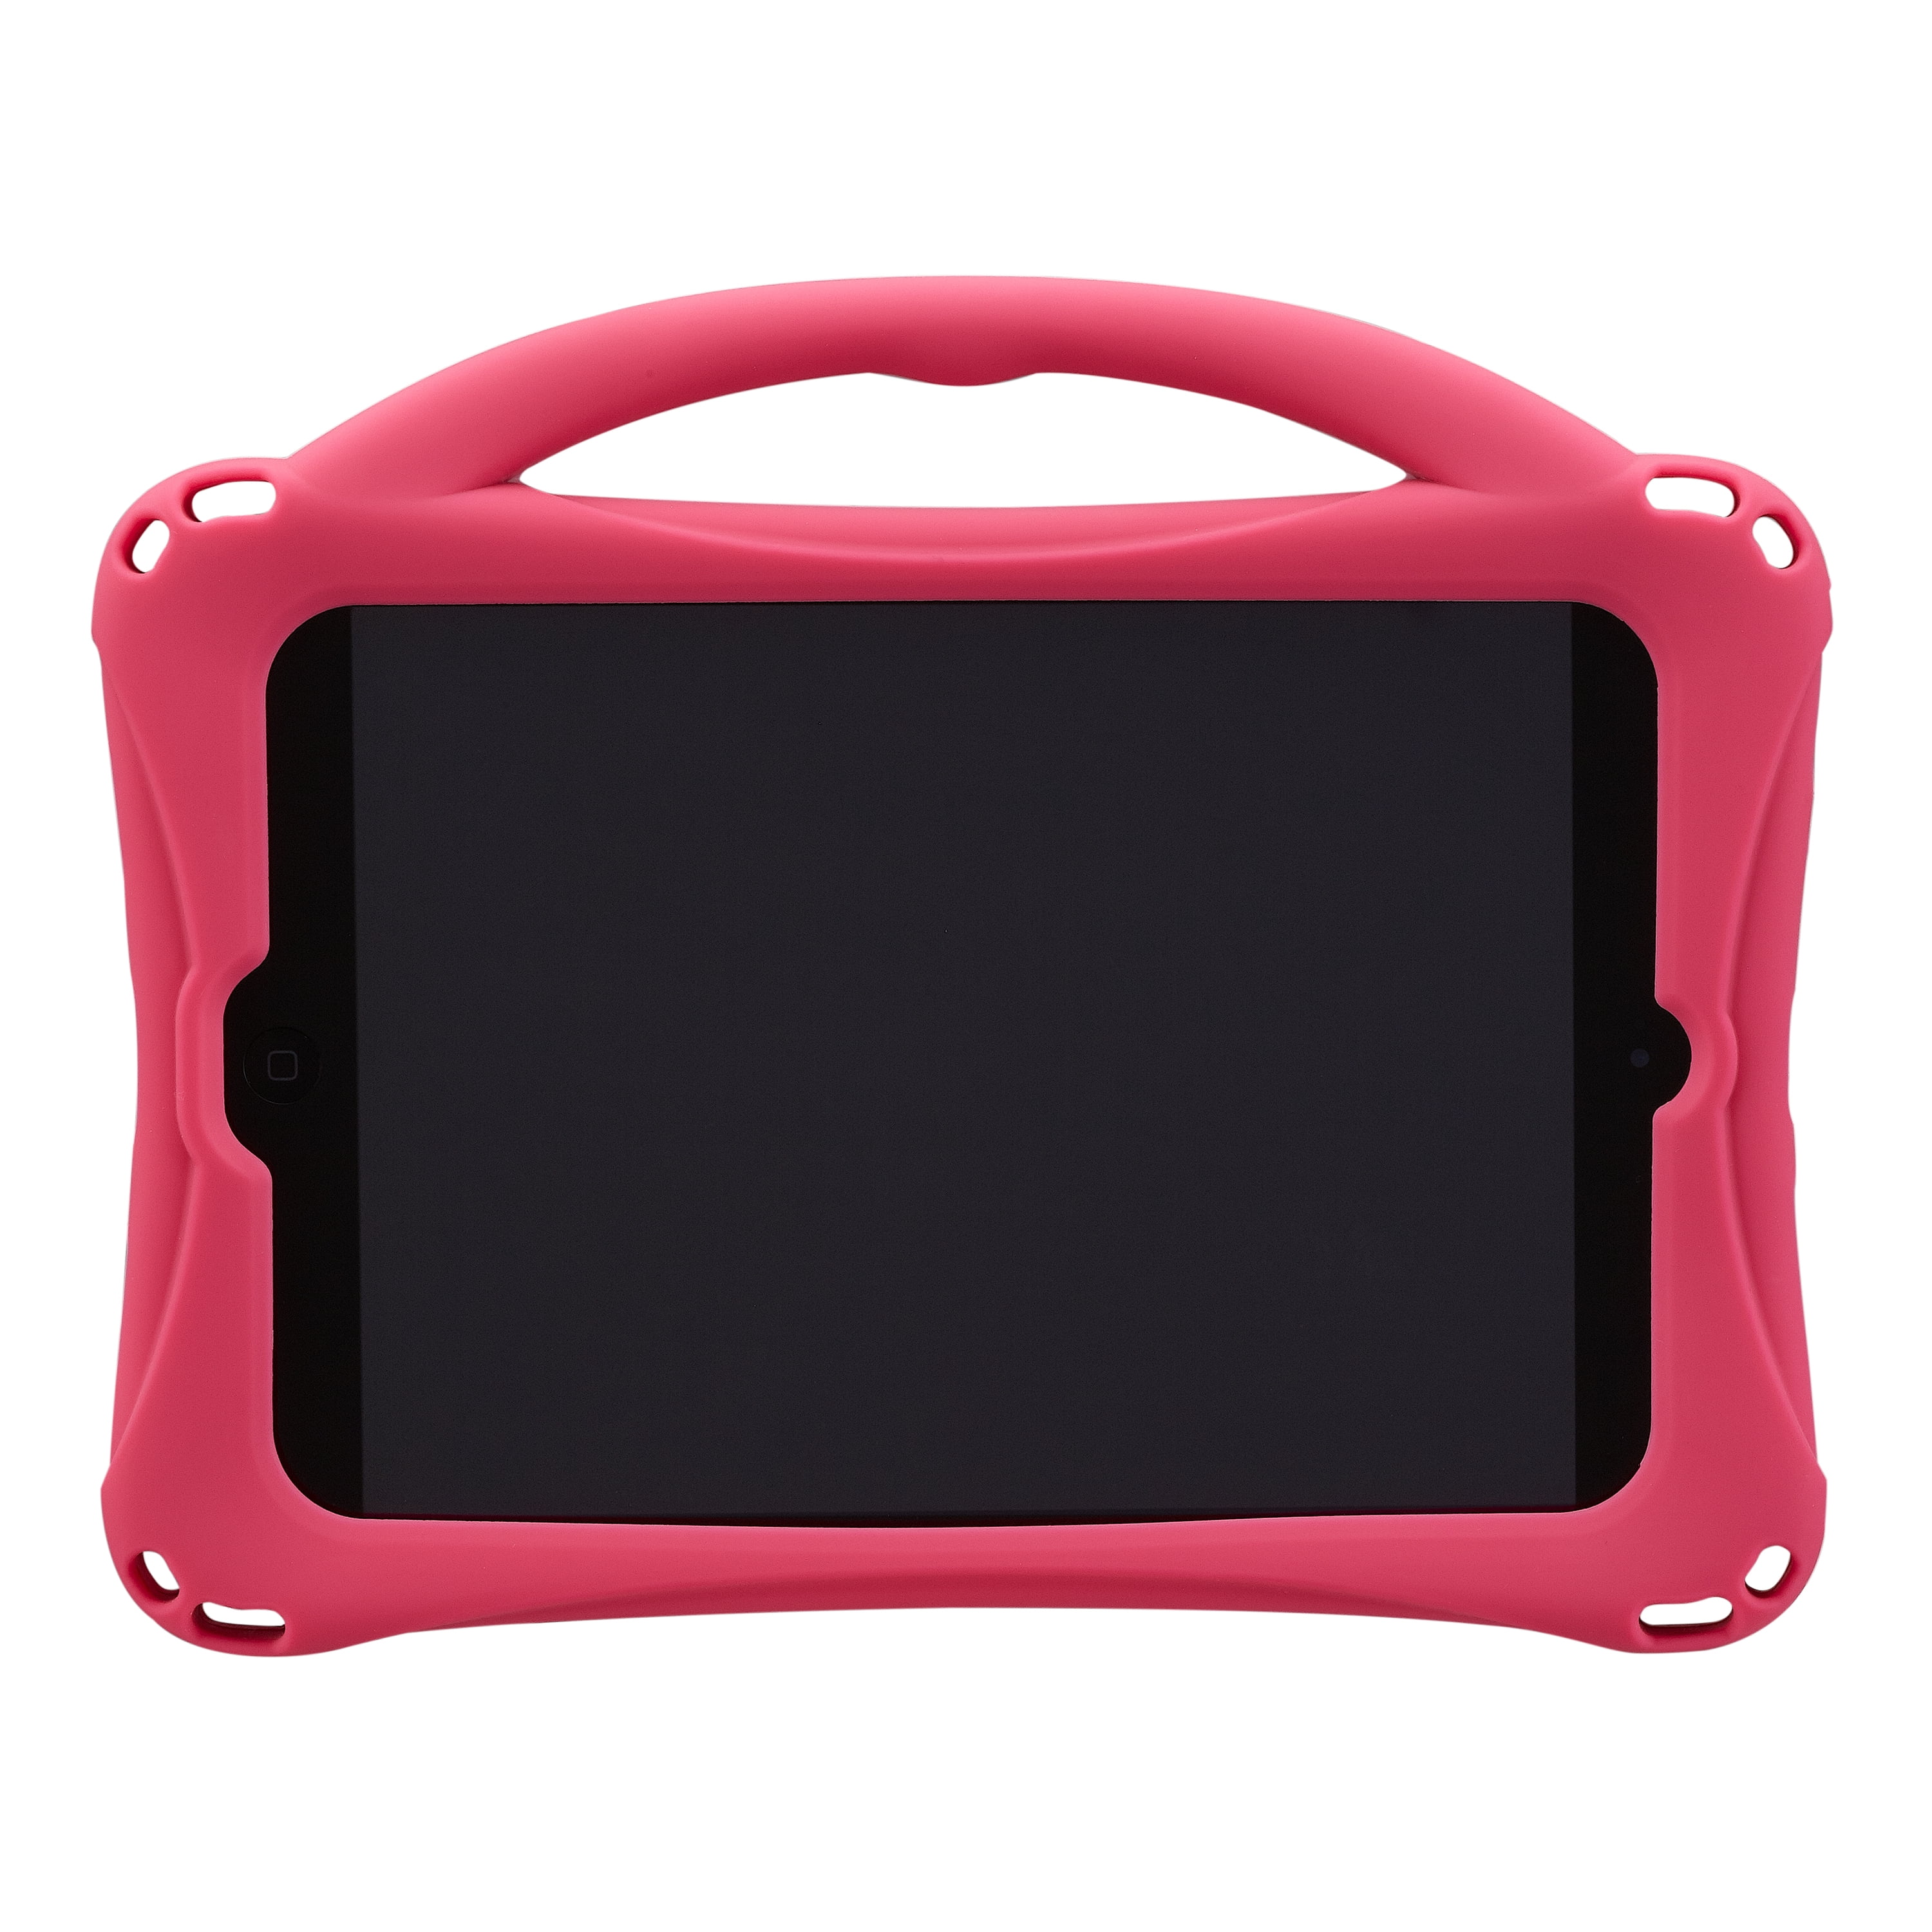 Onn Kid S 7 8 Universal Tablet Case Pink Walmart Com